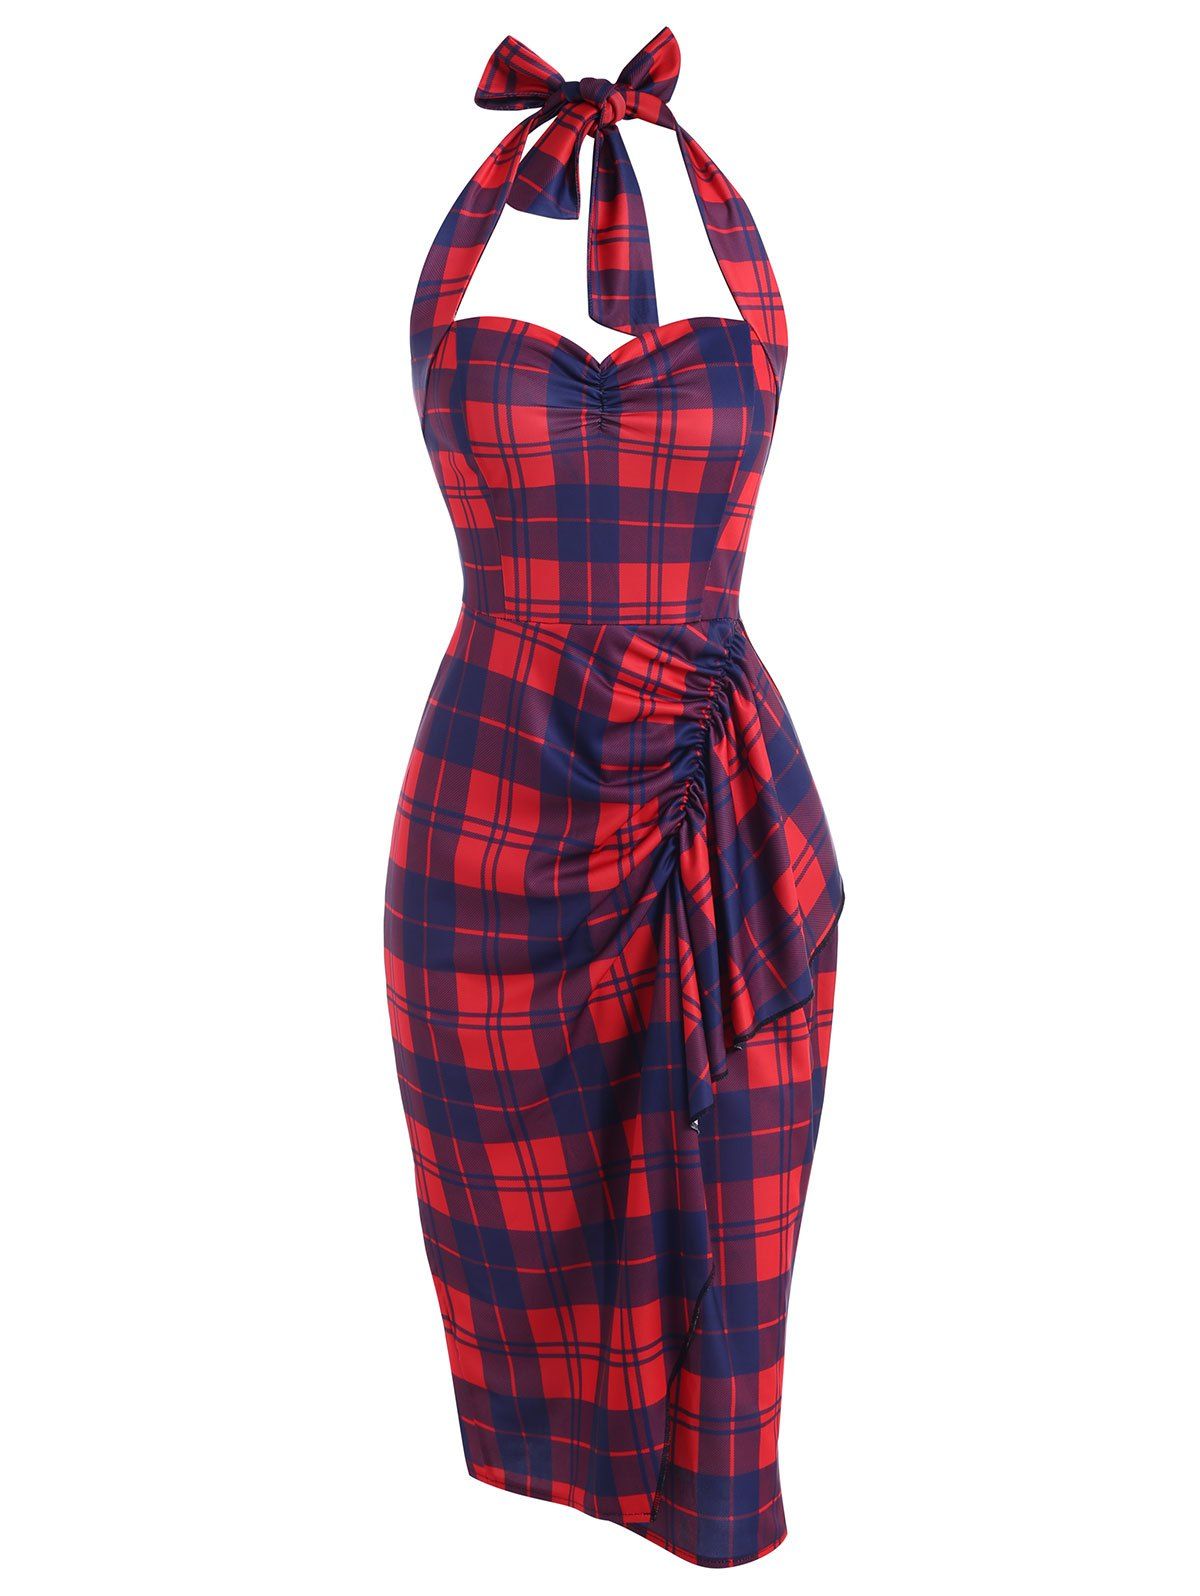 Plaid Halter Backless Ruffle Sheath Dress - RED XL